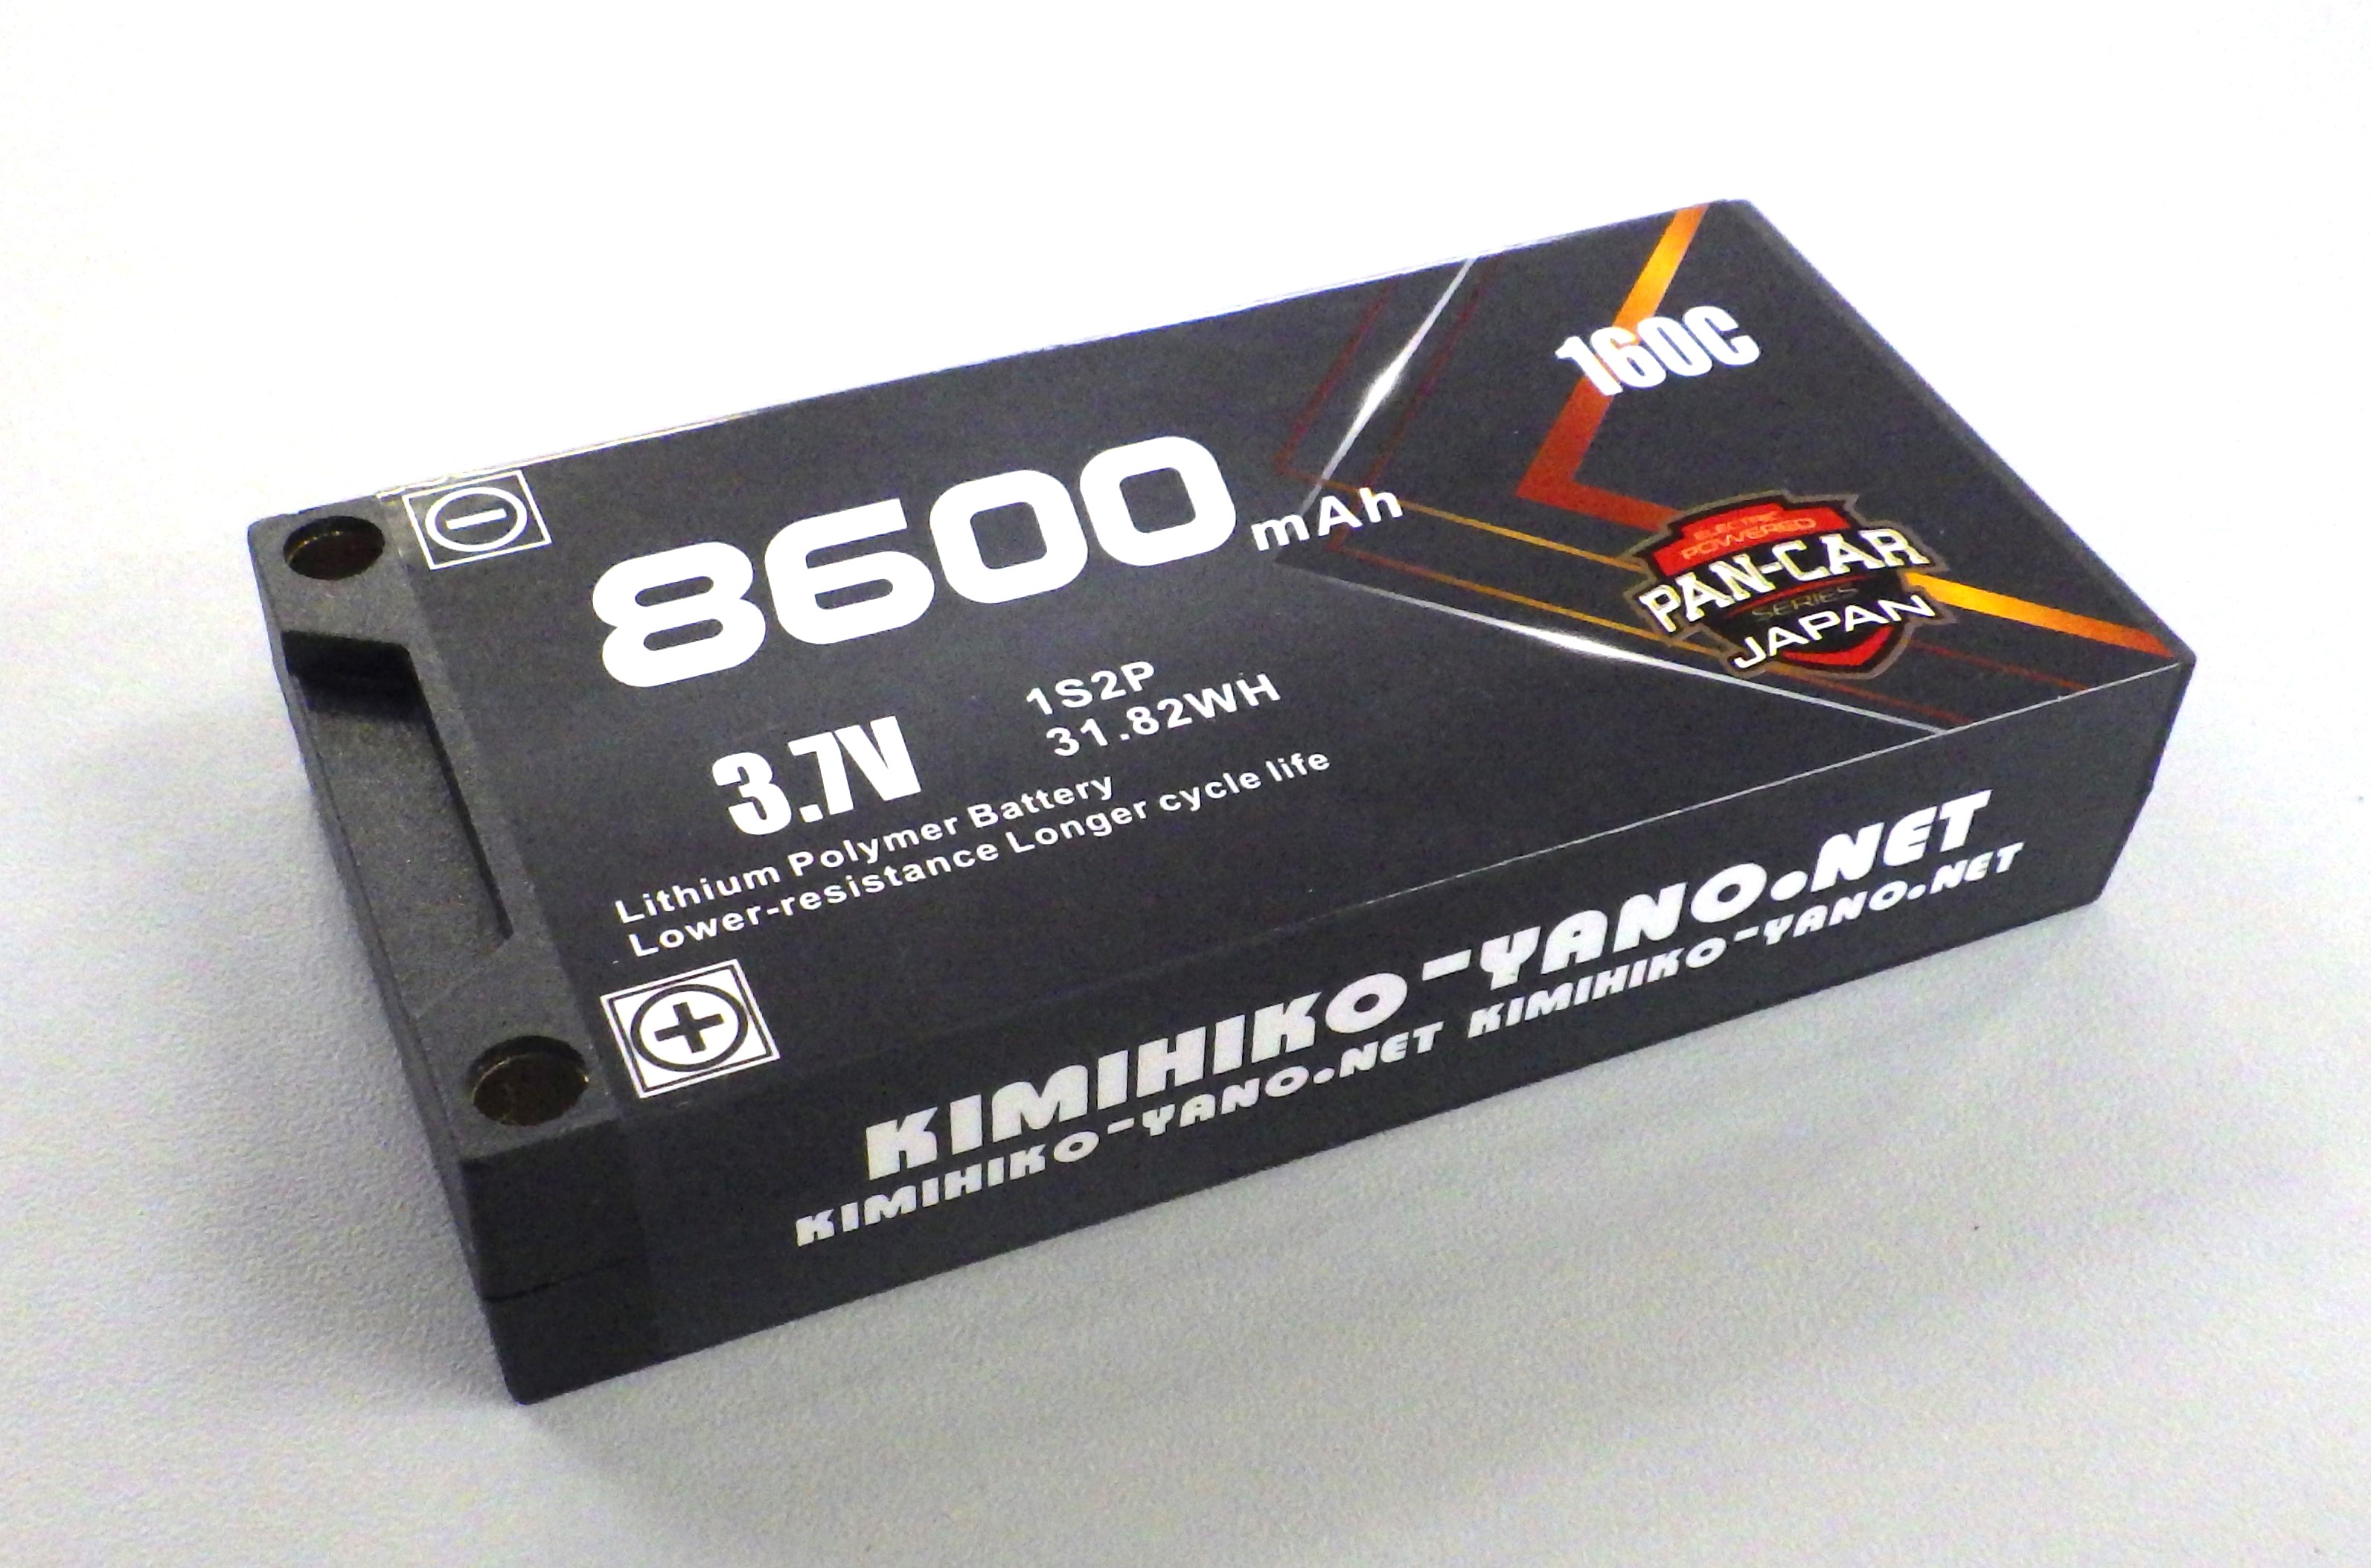 EPS-Jバッテリー（1セルサイズ 3.7V 8600mAh 160C）: 5mmコネクター